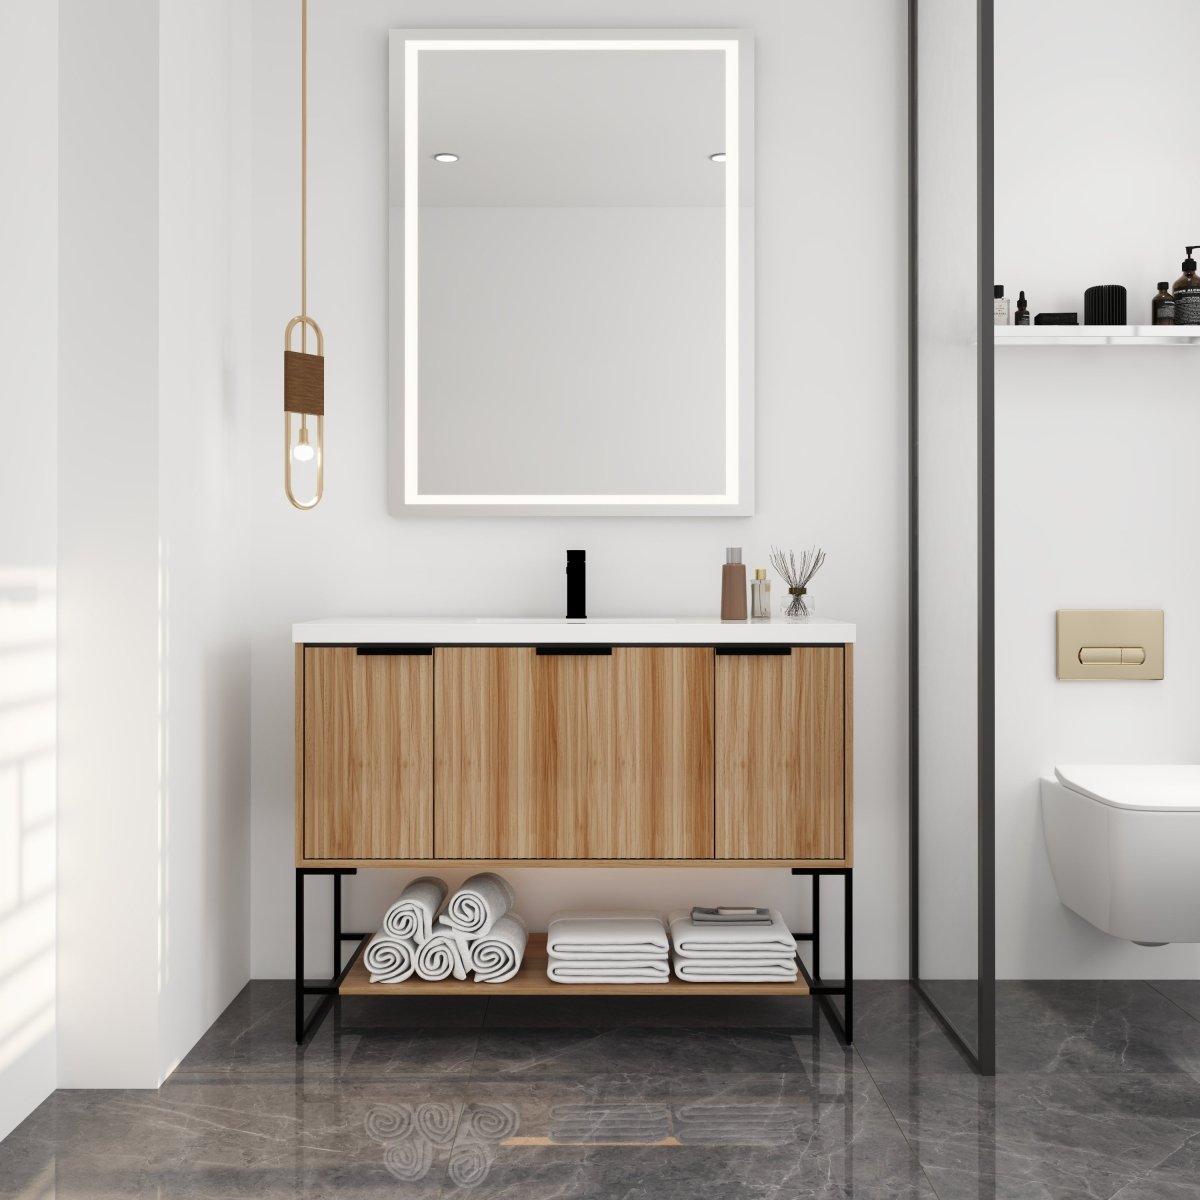 ExBrite 48 Inch Freestanding Bathroom Vanity With Resin Basin,48x18